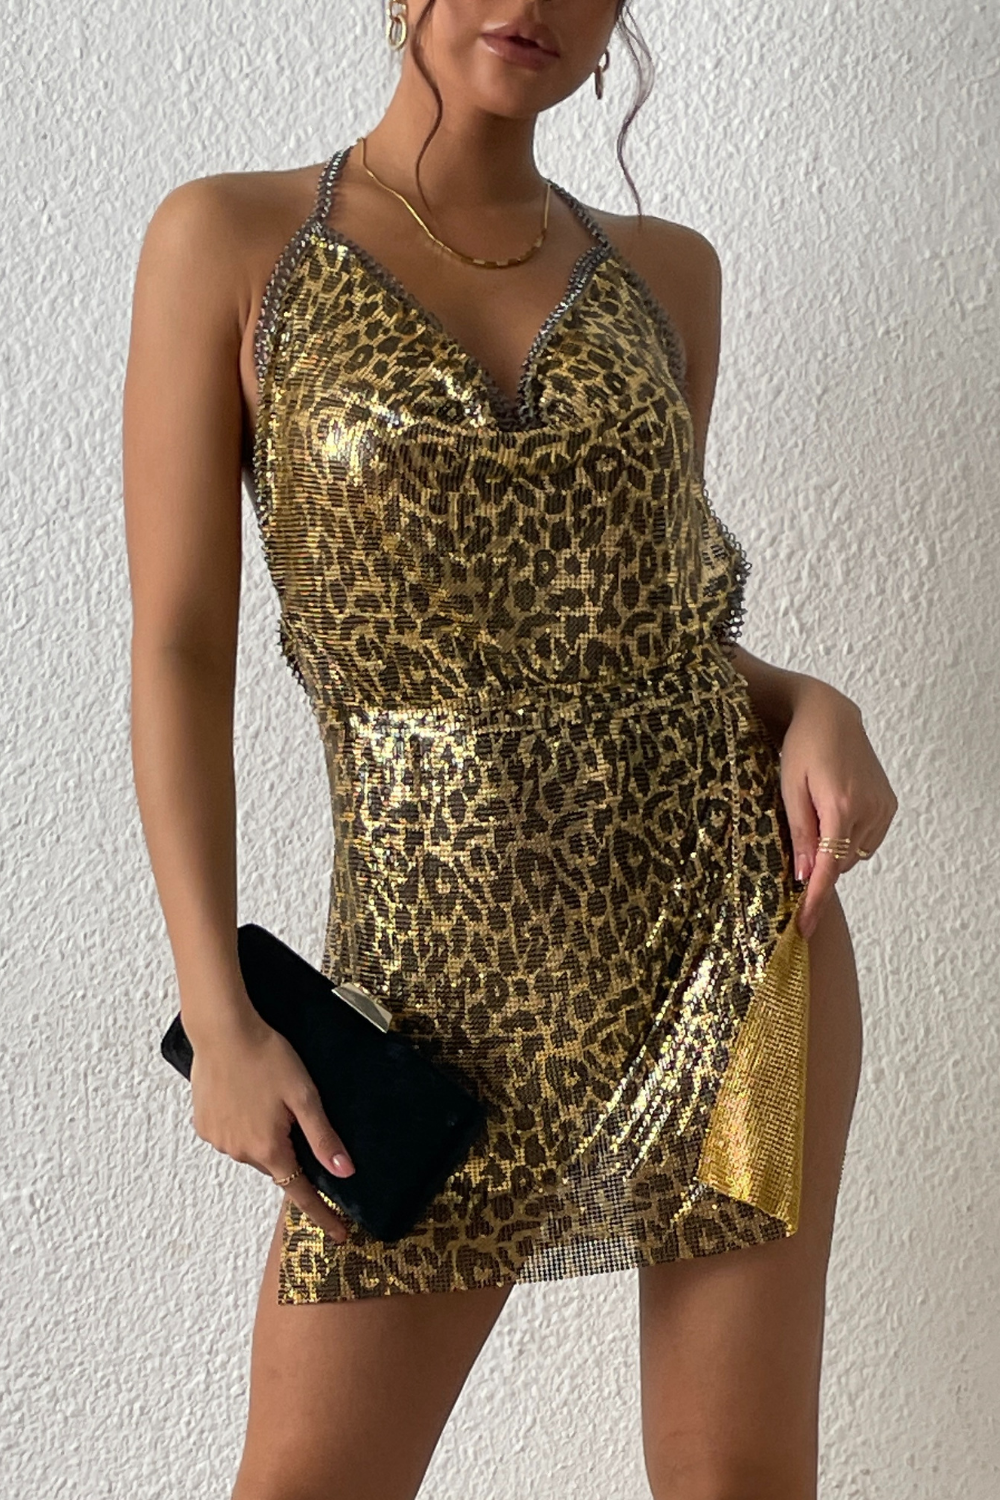 Hemming Chain Dress - Brown Leopard